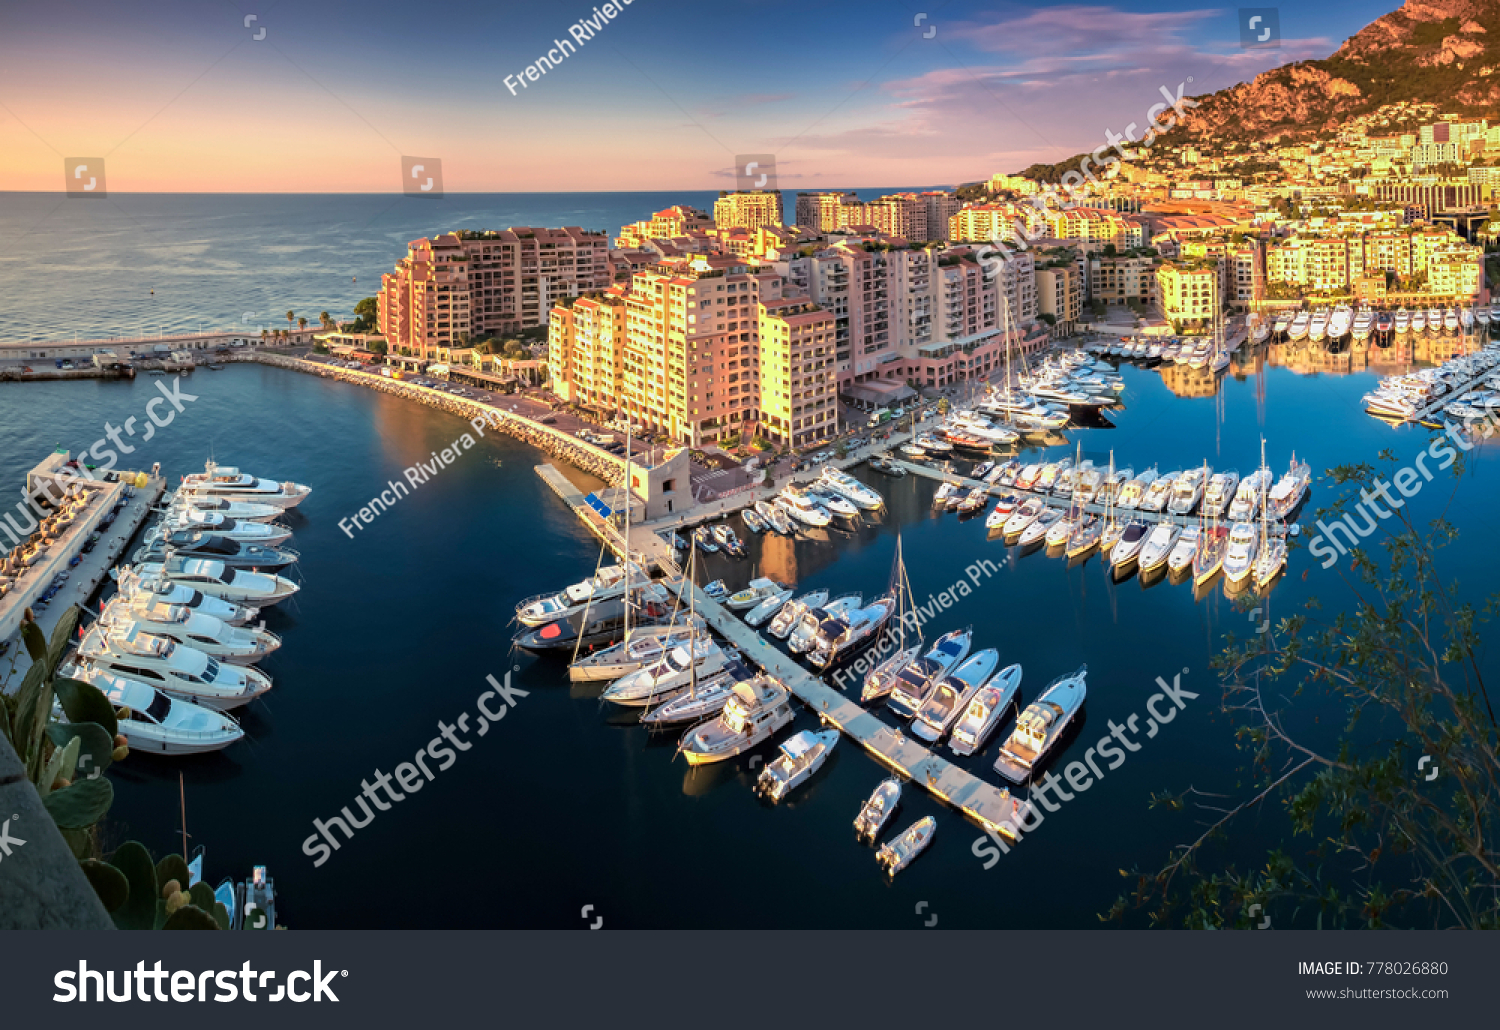 Monaco Fontvielle harbor #778026880